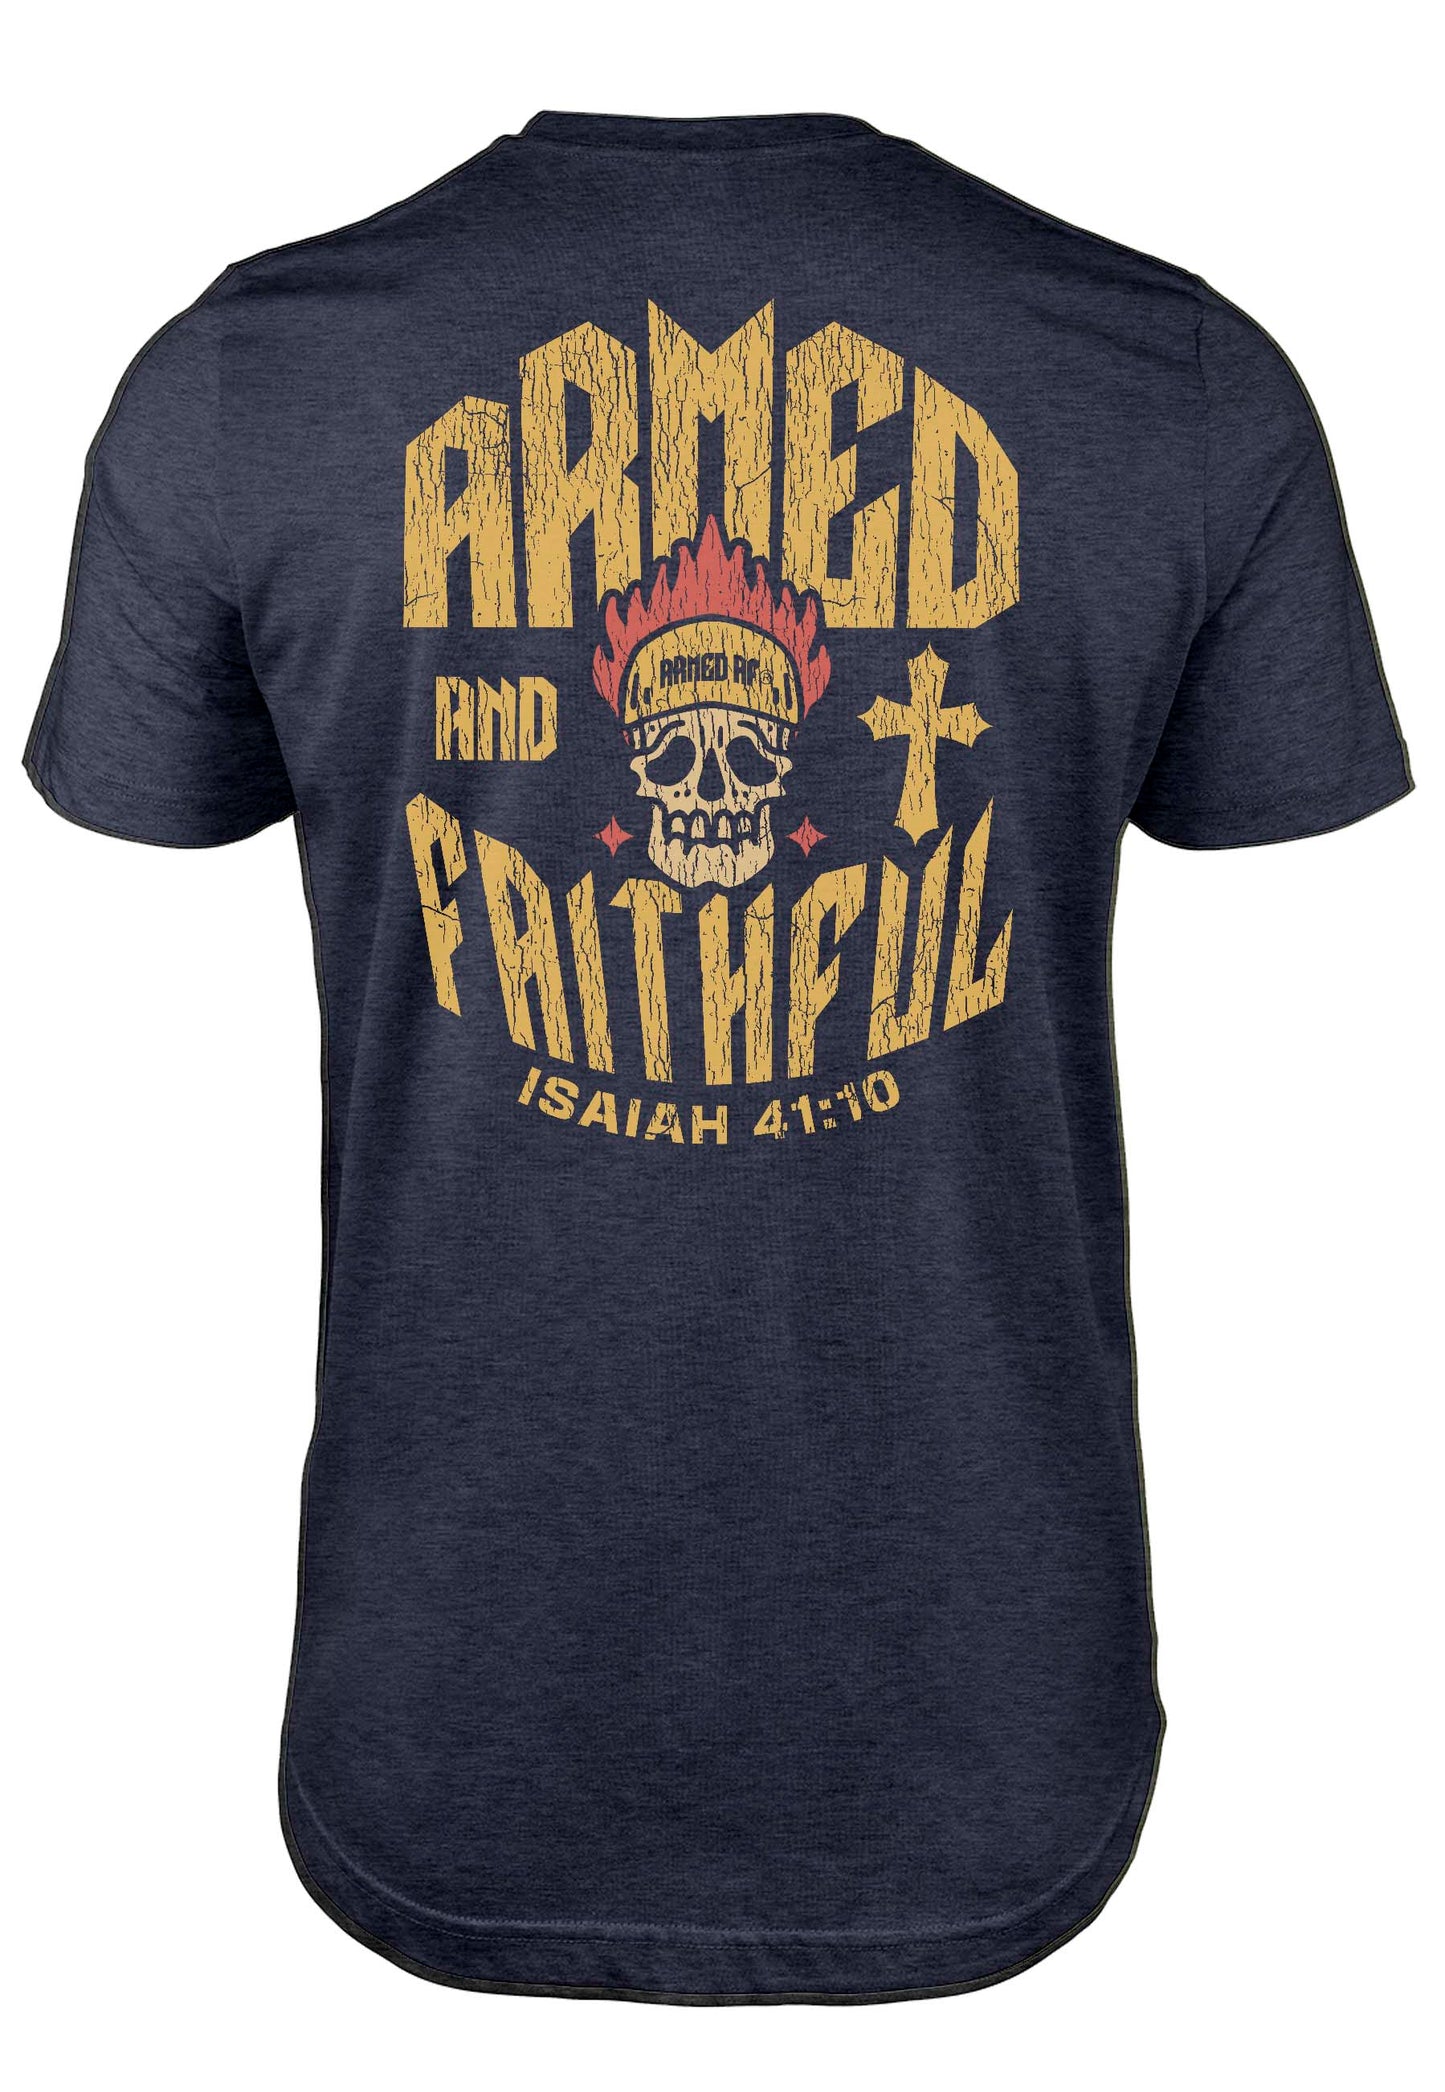 Armed AF® Christian t-shirt with skull